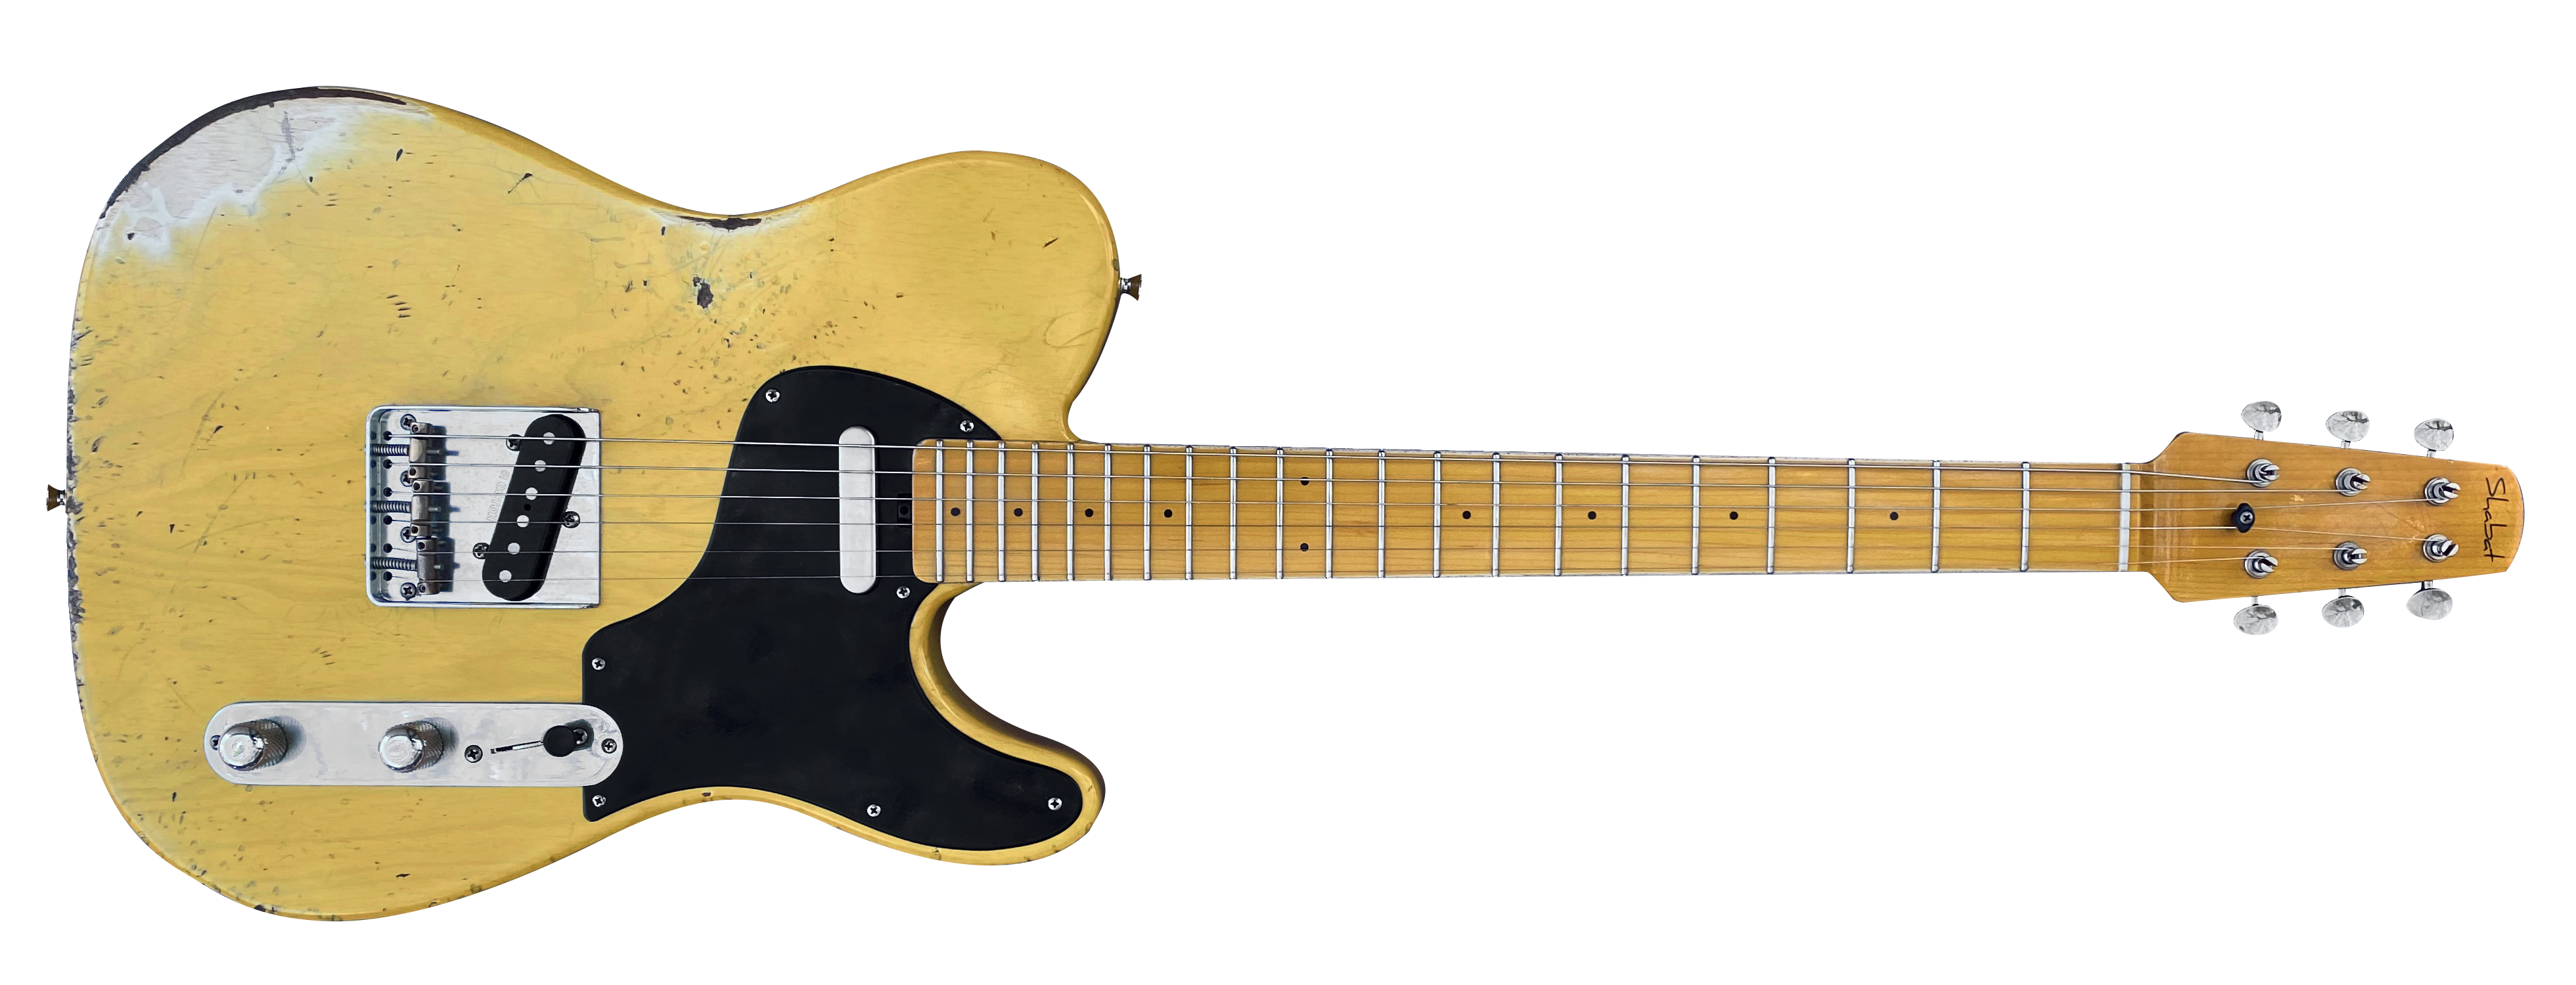 Shabat Lion Standard Custom Electric Guitar